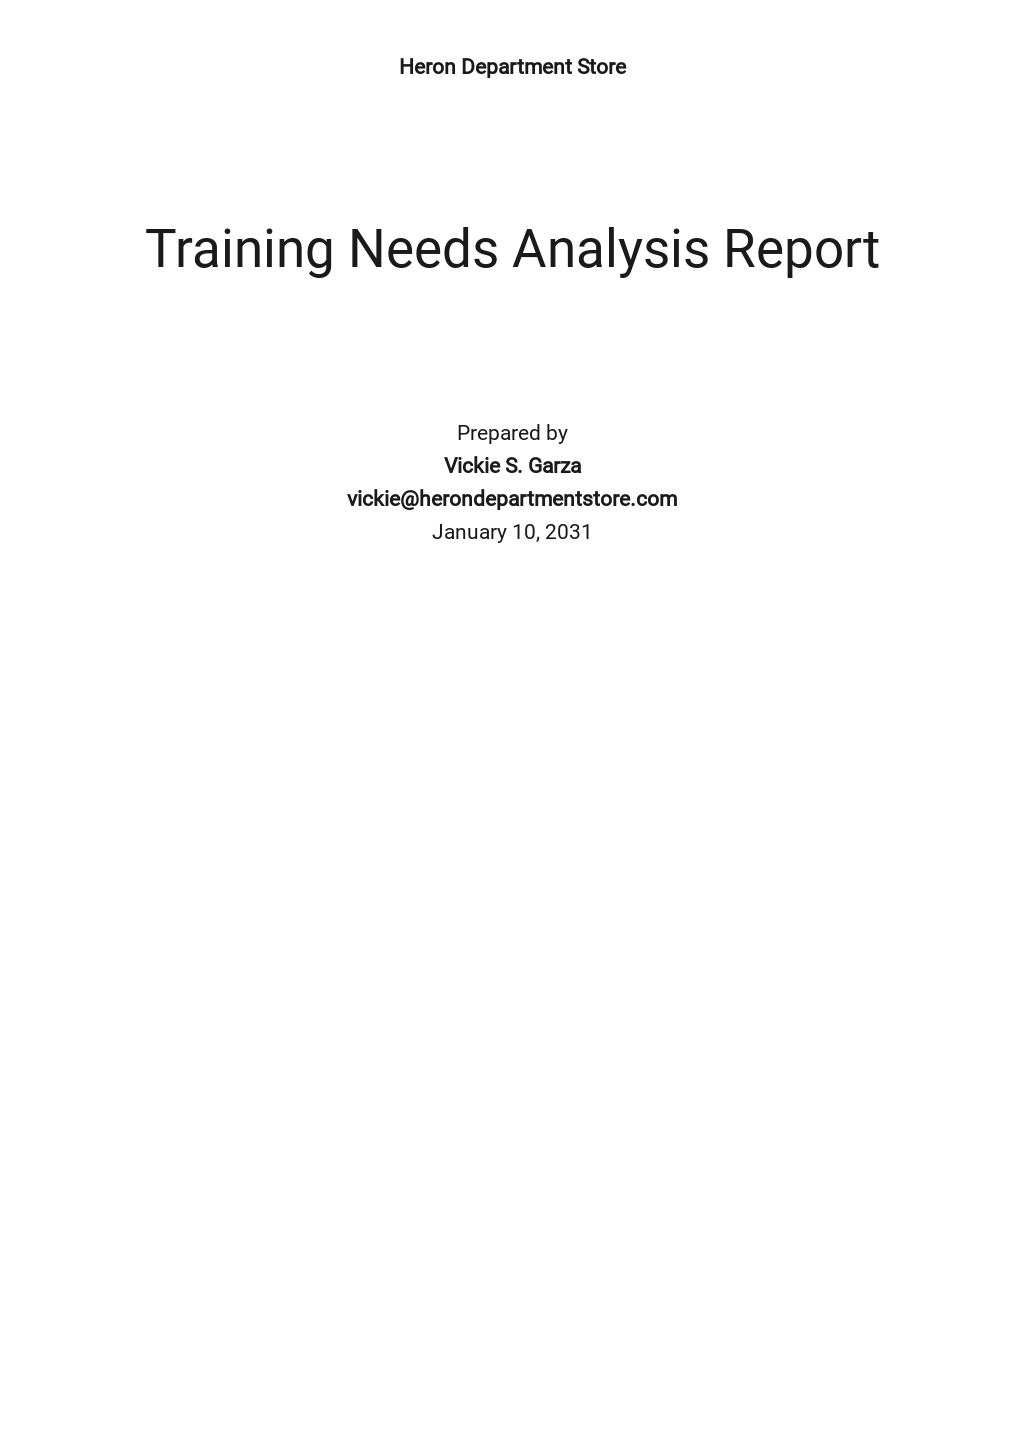 Training Needs Analysis Report Template - Google Docs, Word Inside Training Needs Analysis Report Template